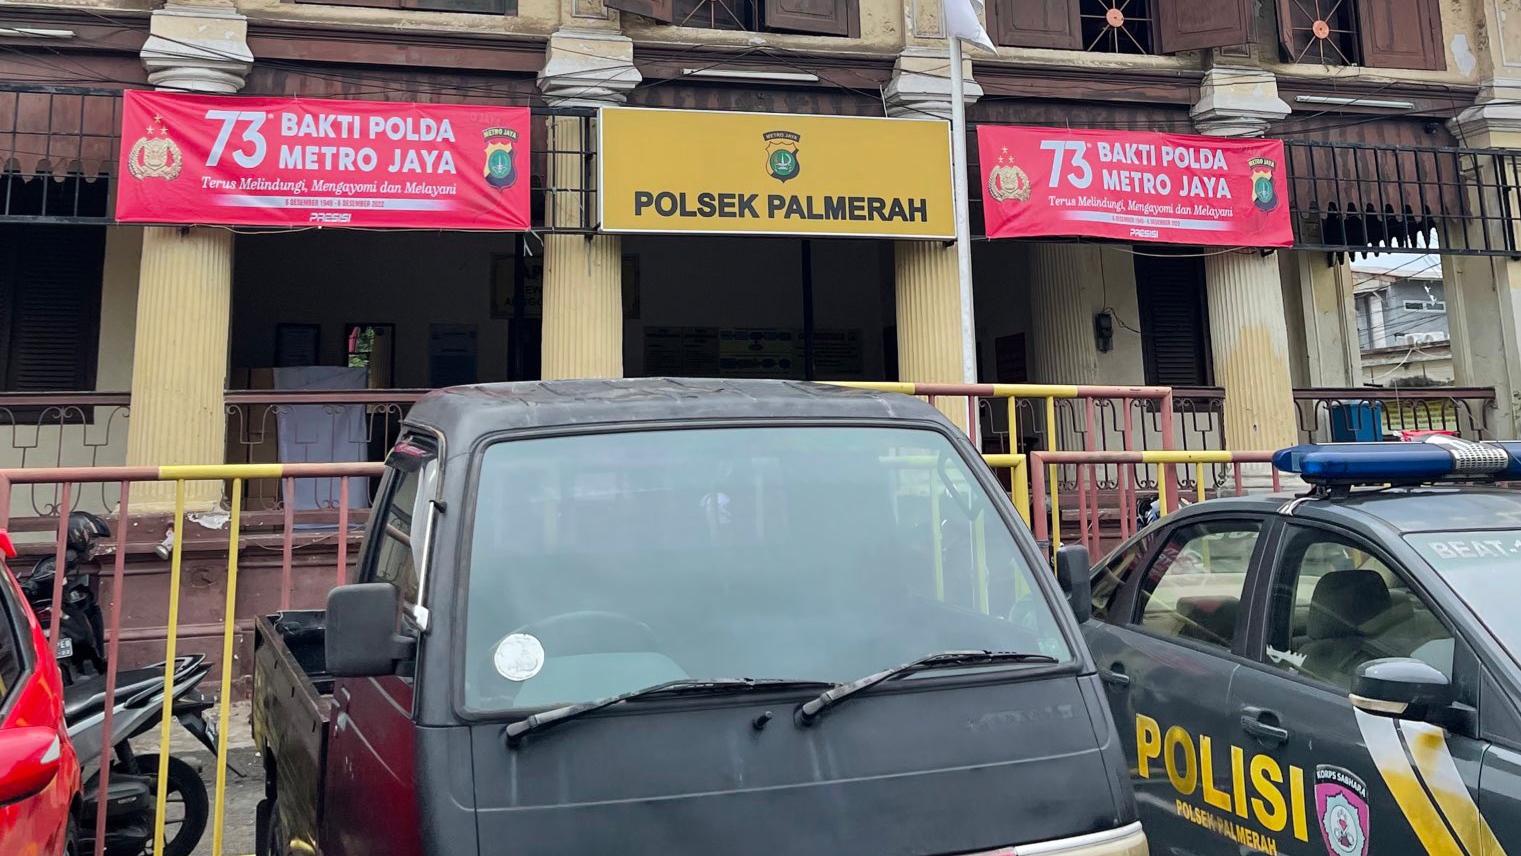 Viral Oknum Polisi Sebut 'Padang Pelit' ke Warga, Kapolsek Palmerah Minta Maaf